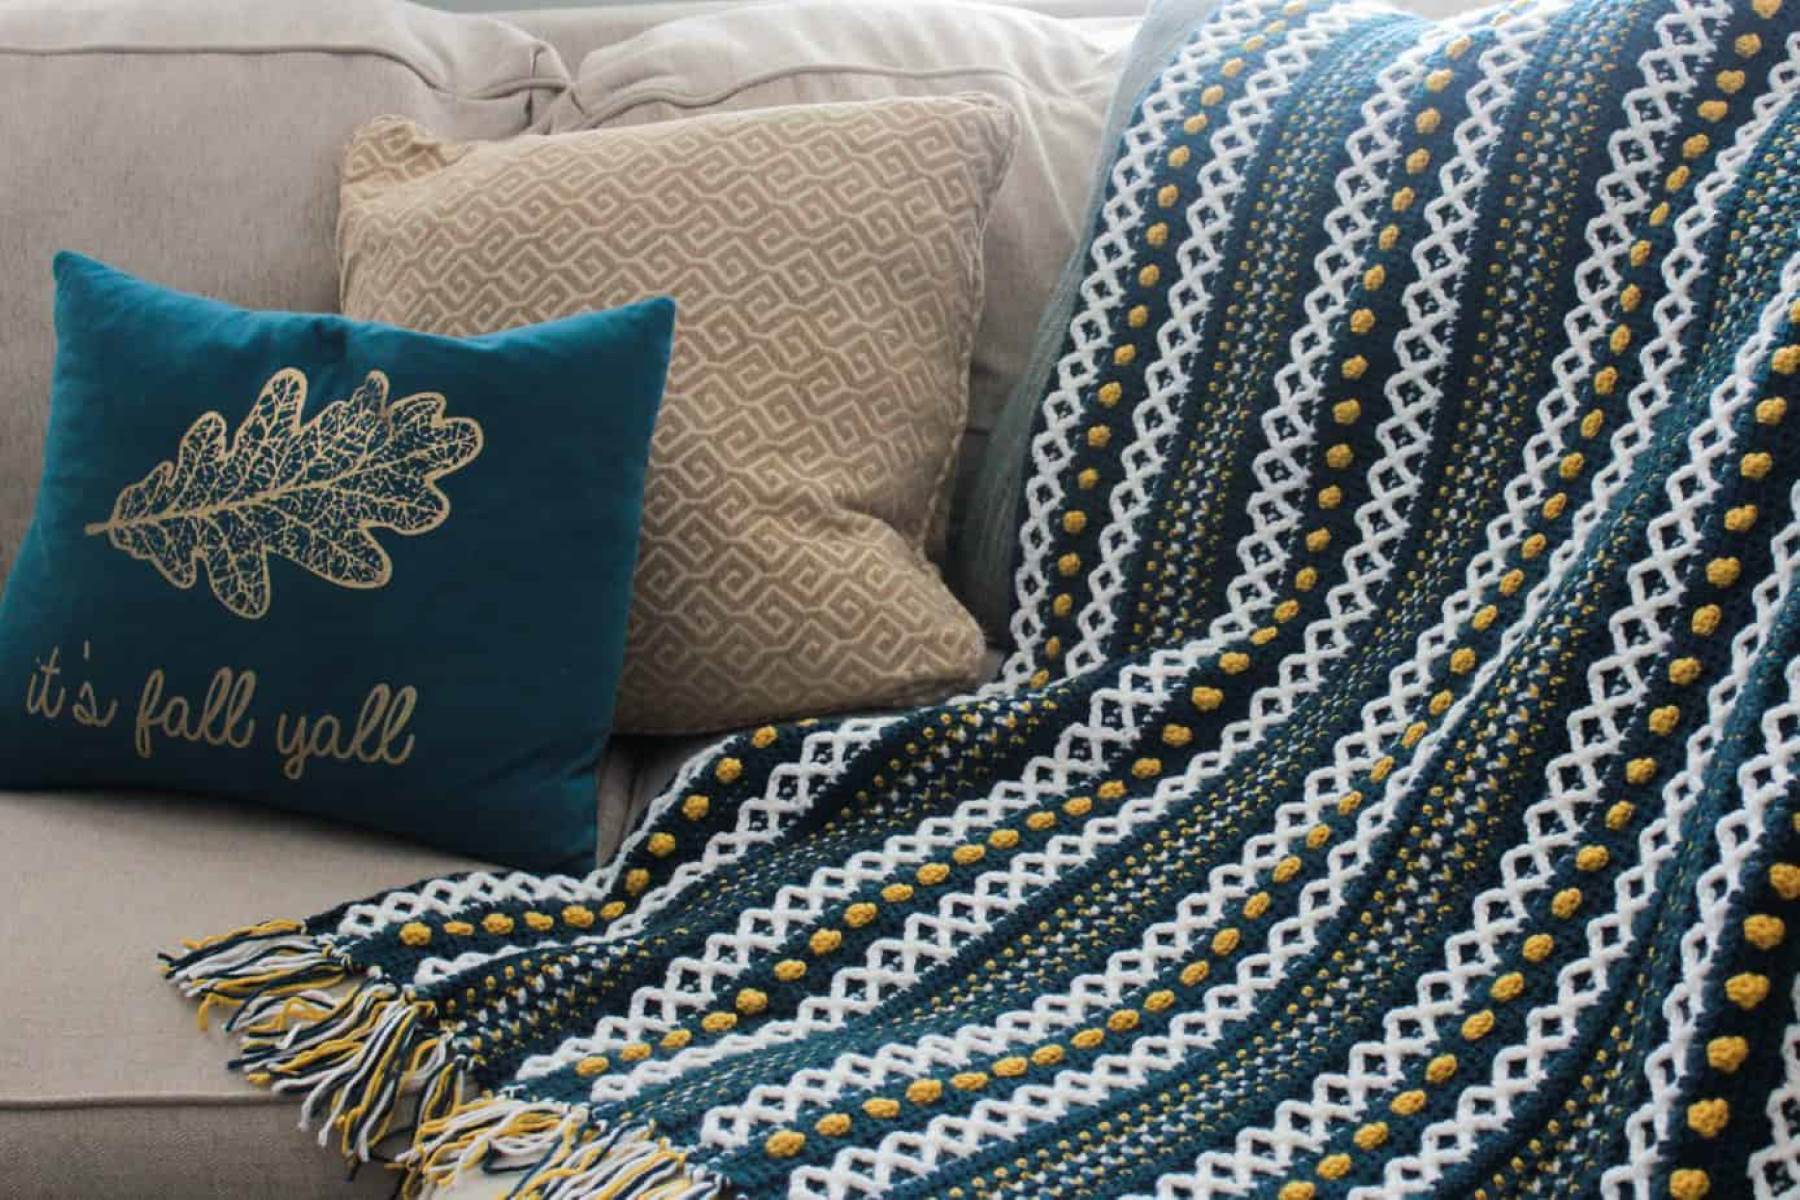 How To Repair A Crochet Blanket